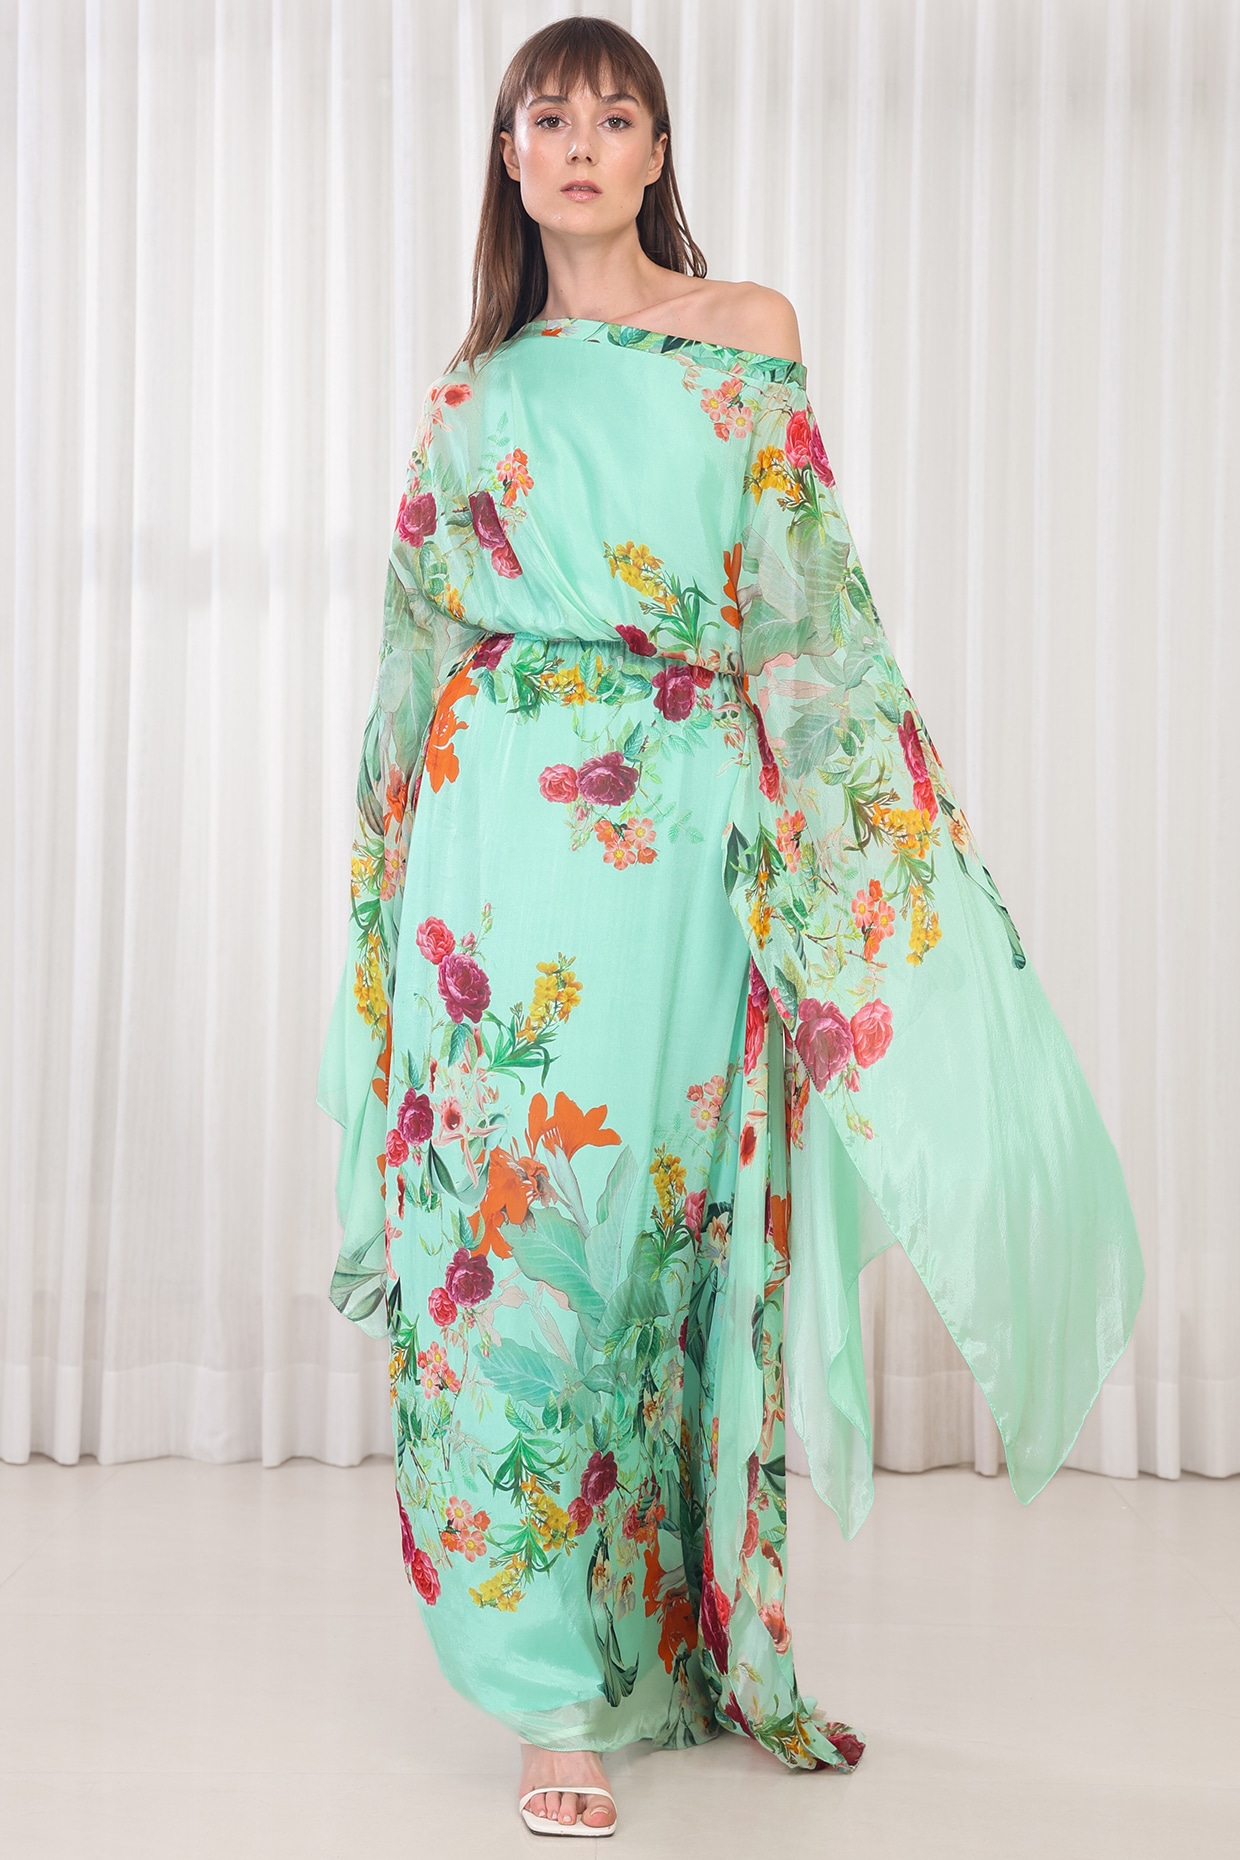 Buy ikichic Blue & White Printed One-Shoulder Kaftan Maxi Dress at Amazon.in